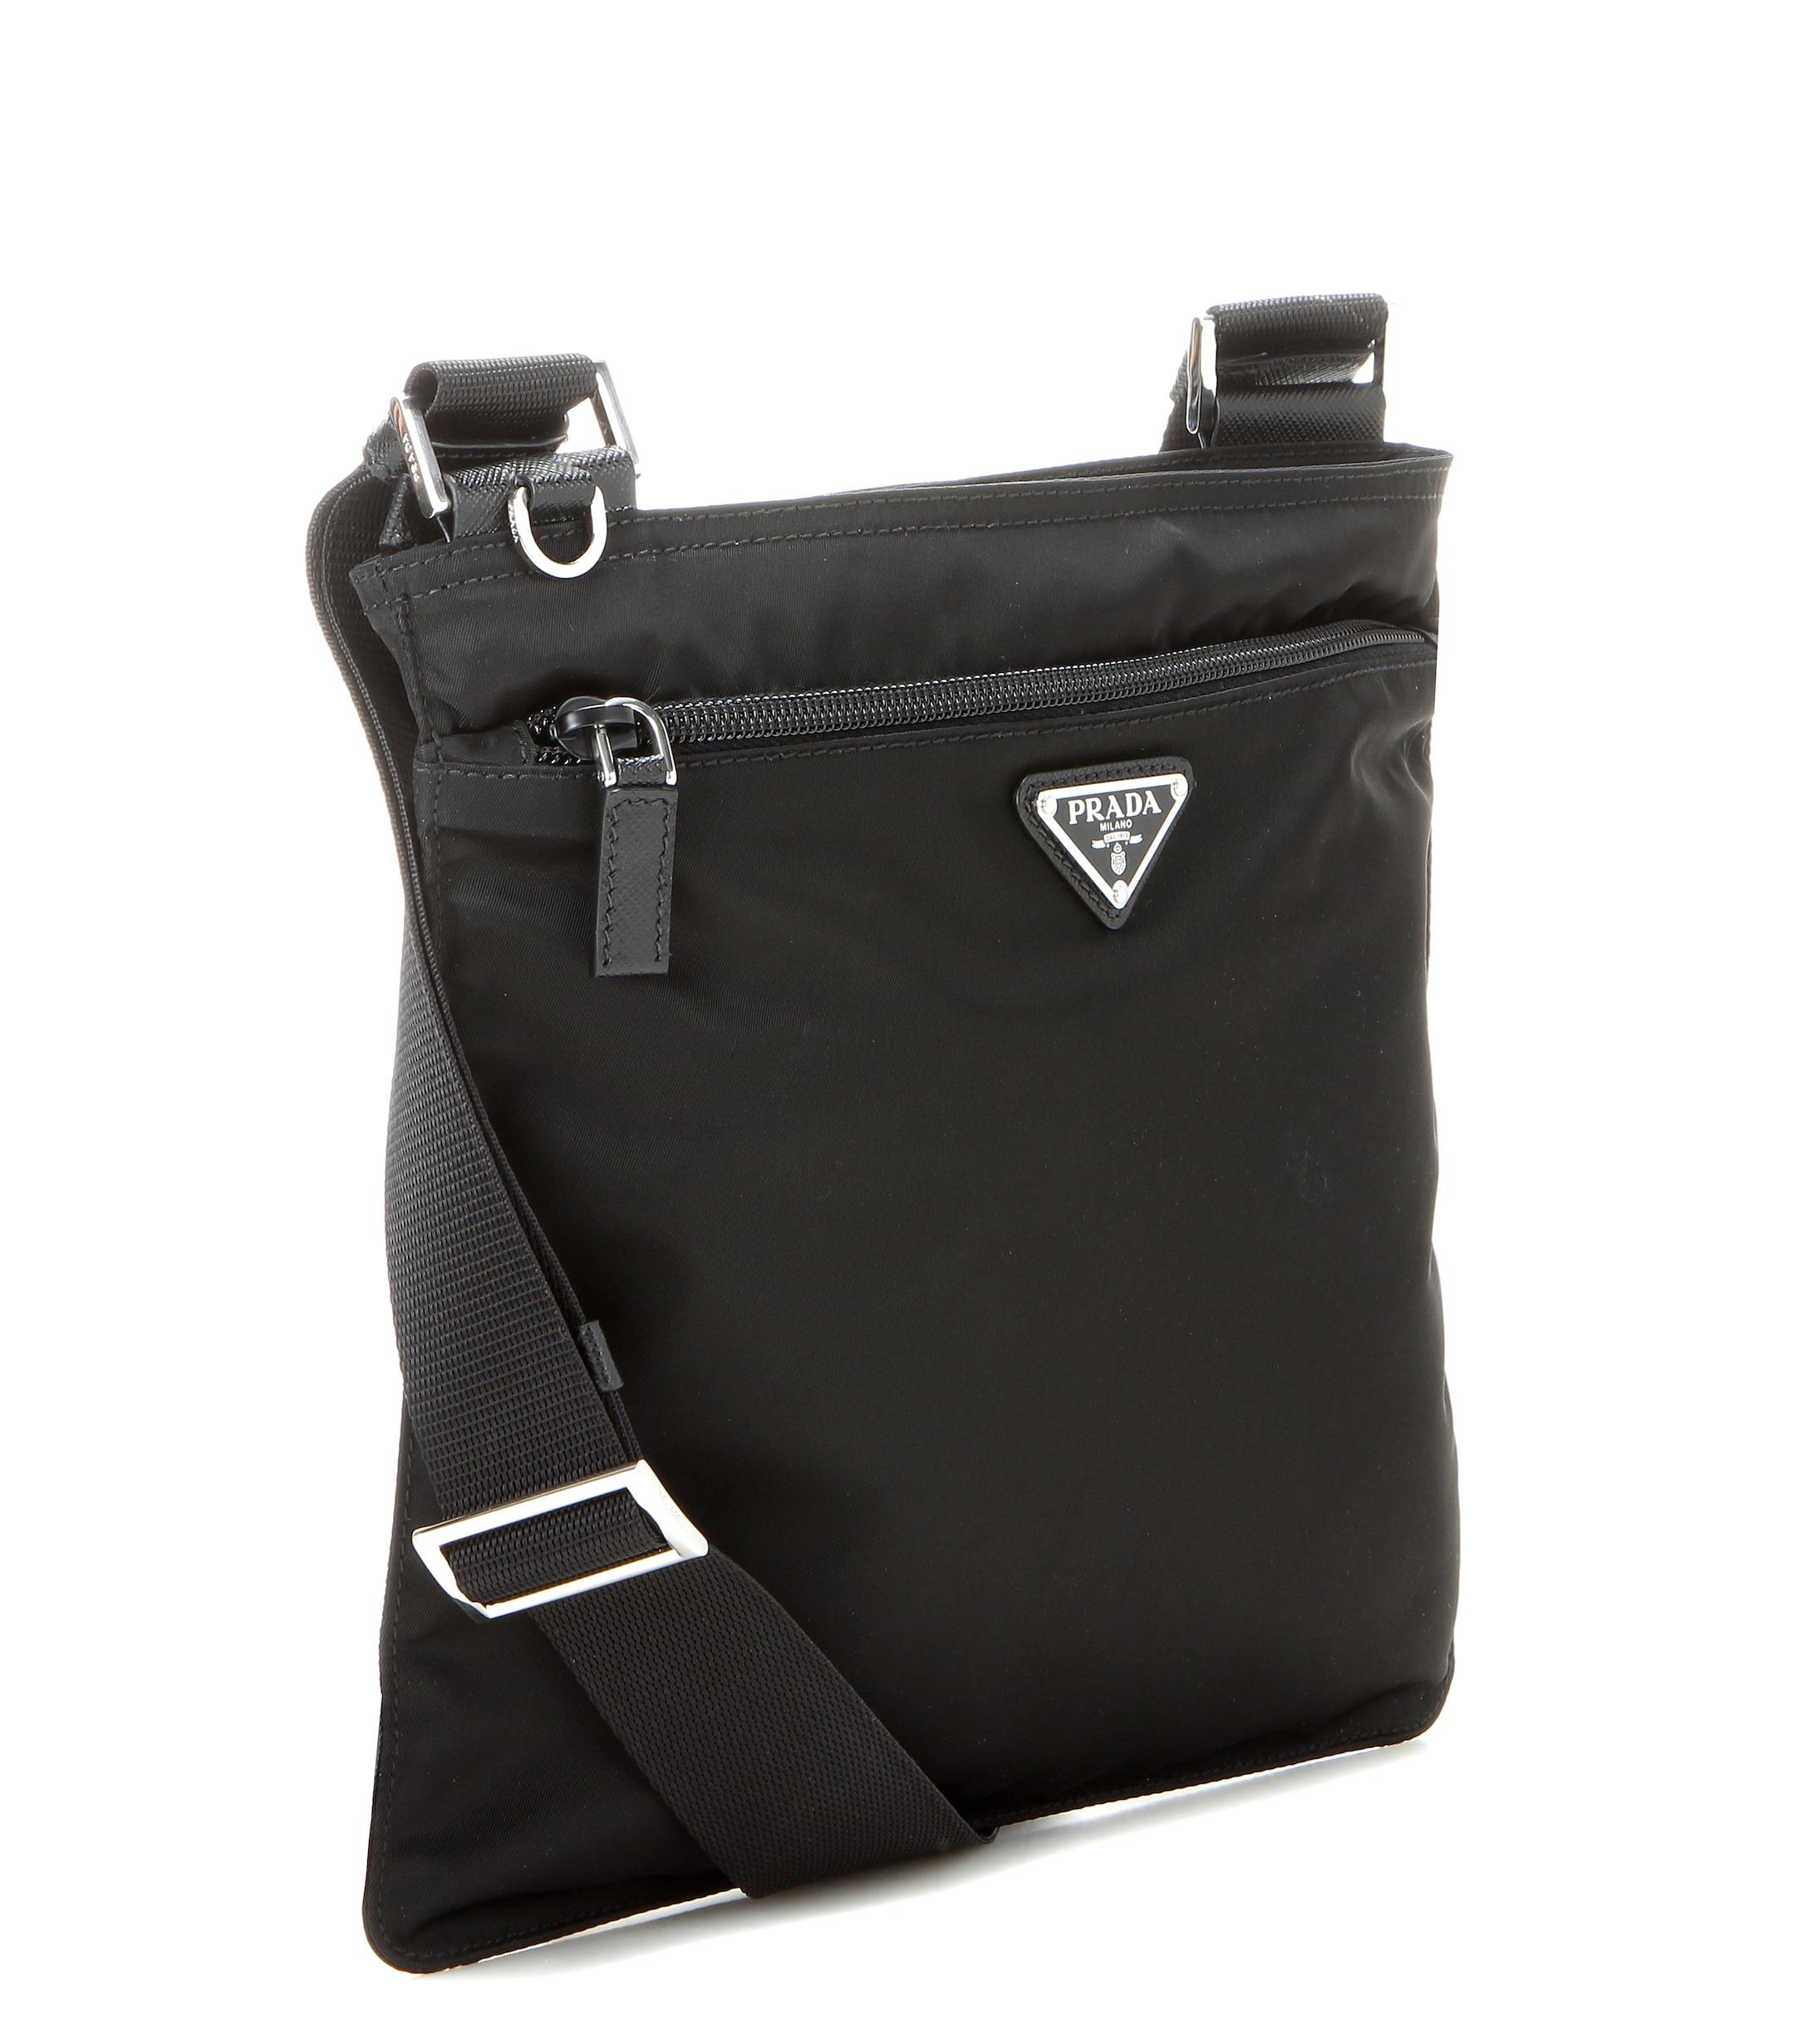 Prada Twill Crossbody Bag in Nero (Black) - Lyst